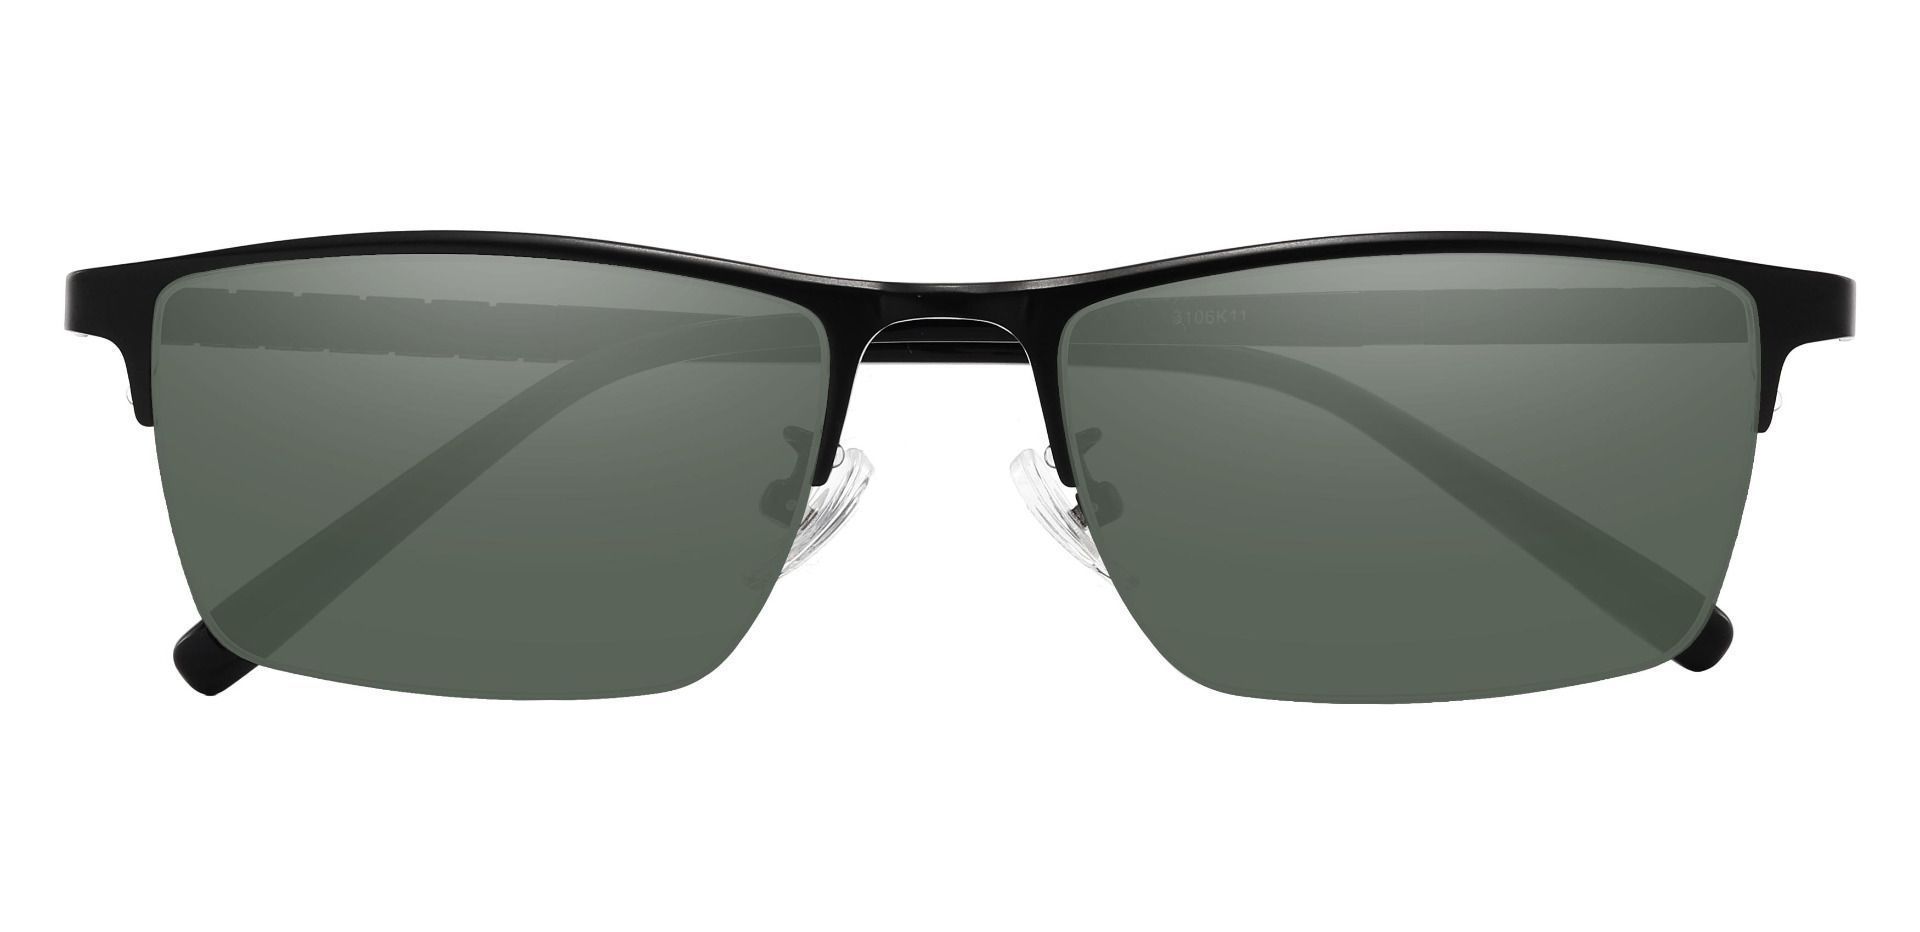 Maine Rectangle Prescription Sunglasses - Black Frame With Green Lenses